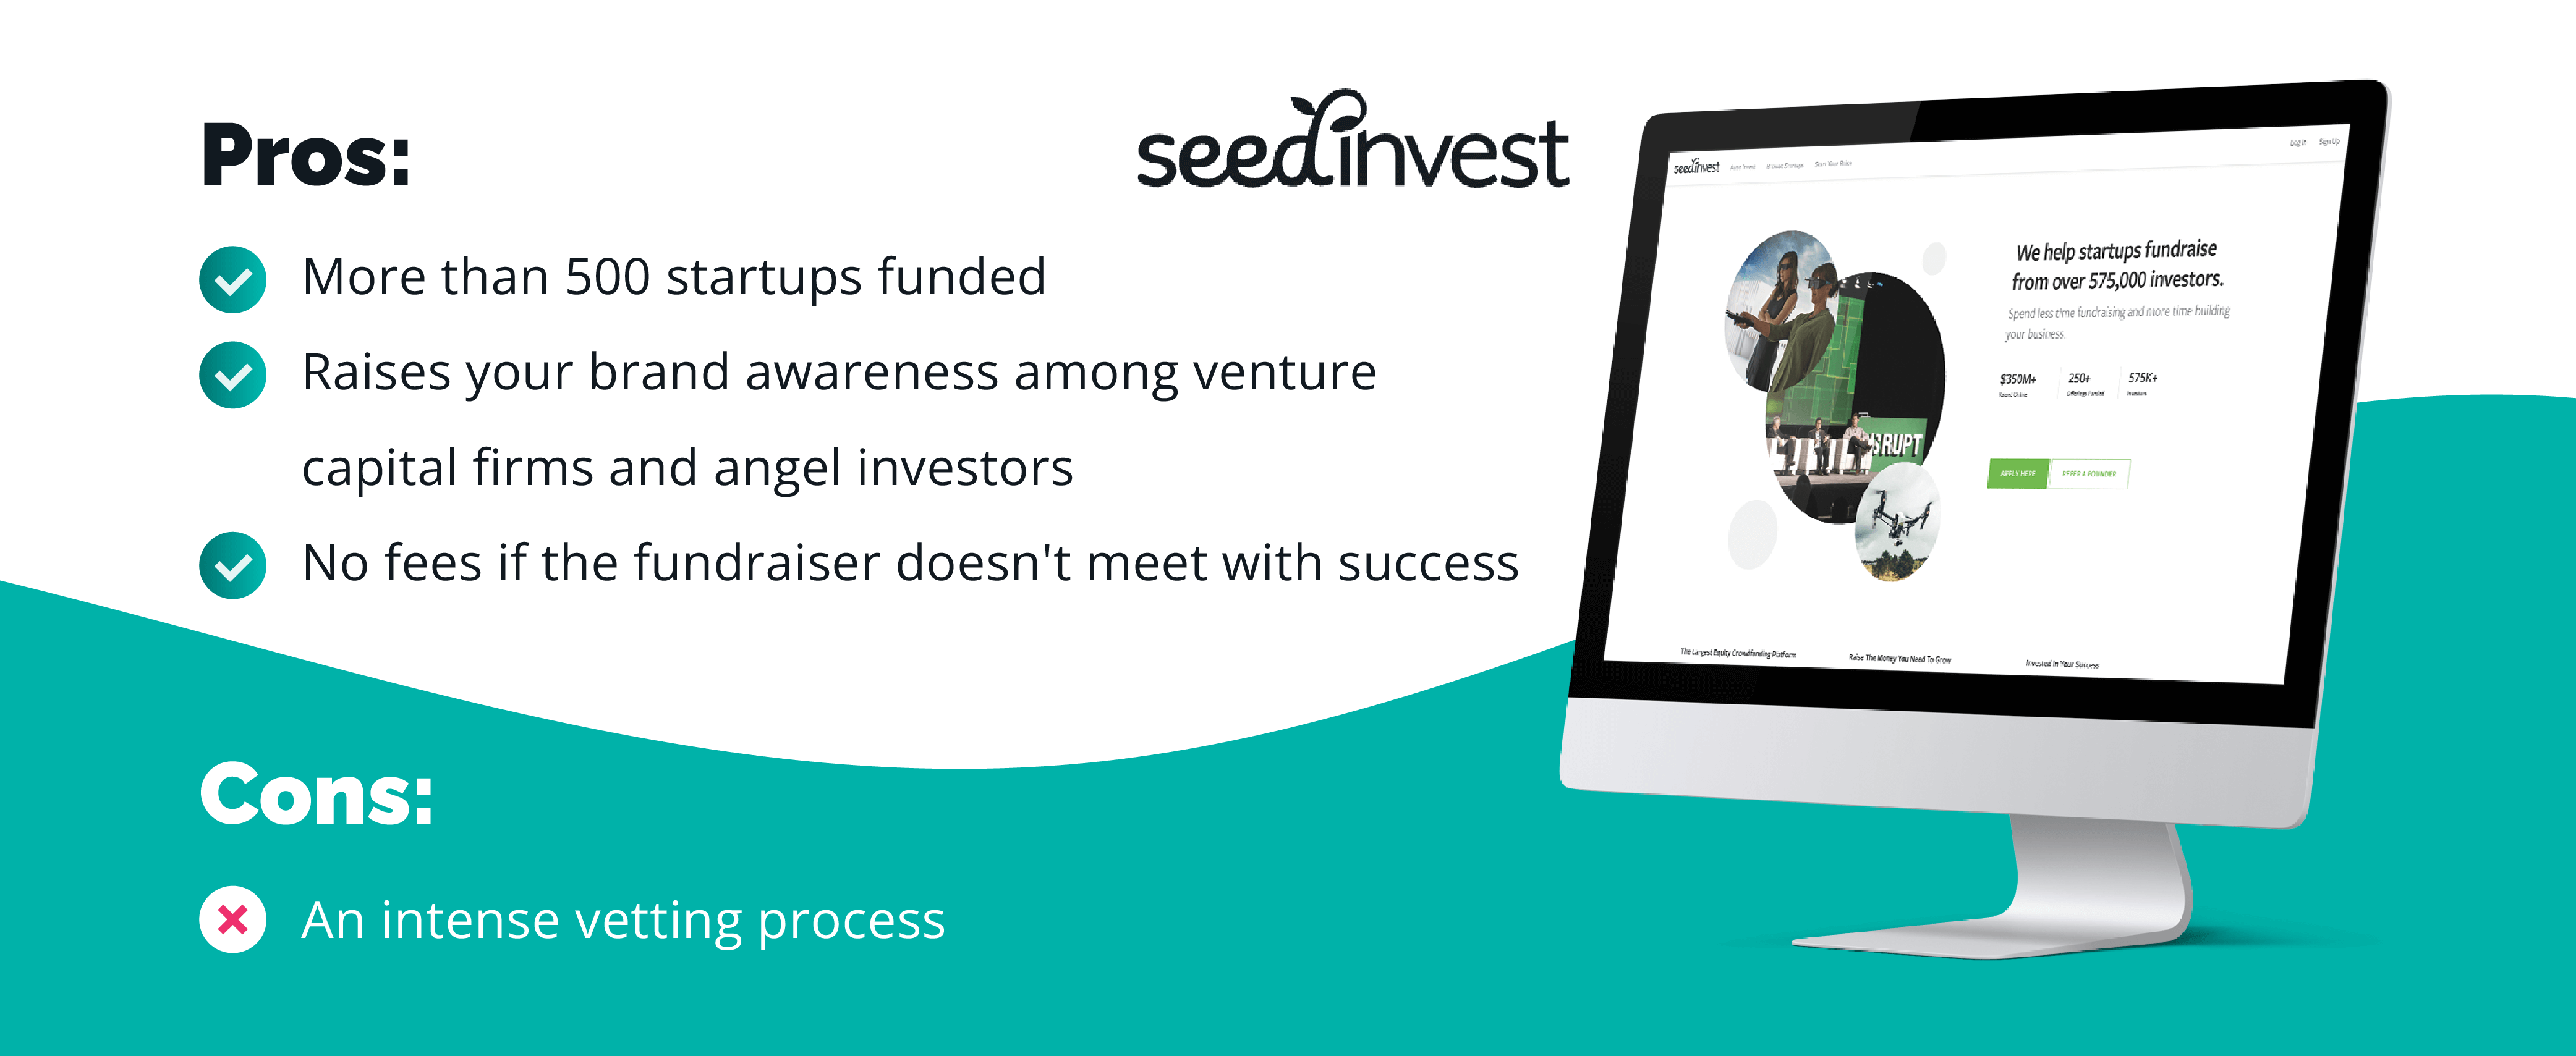 Pros & Cons of SeedInvest